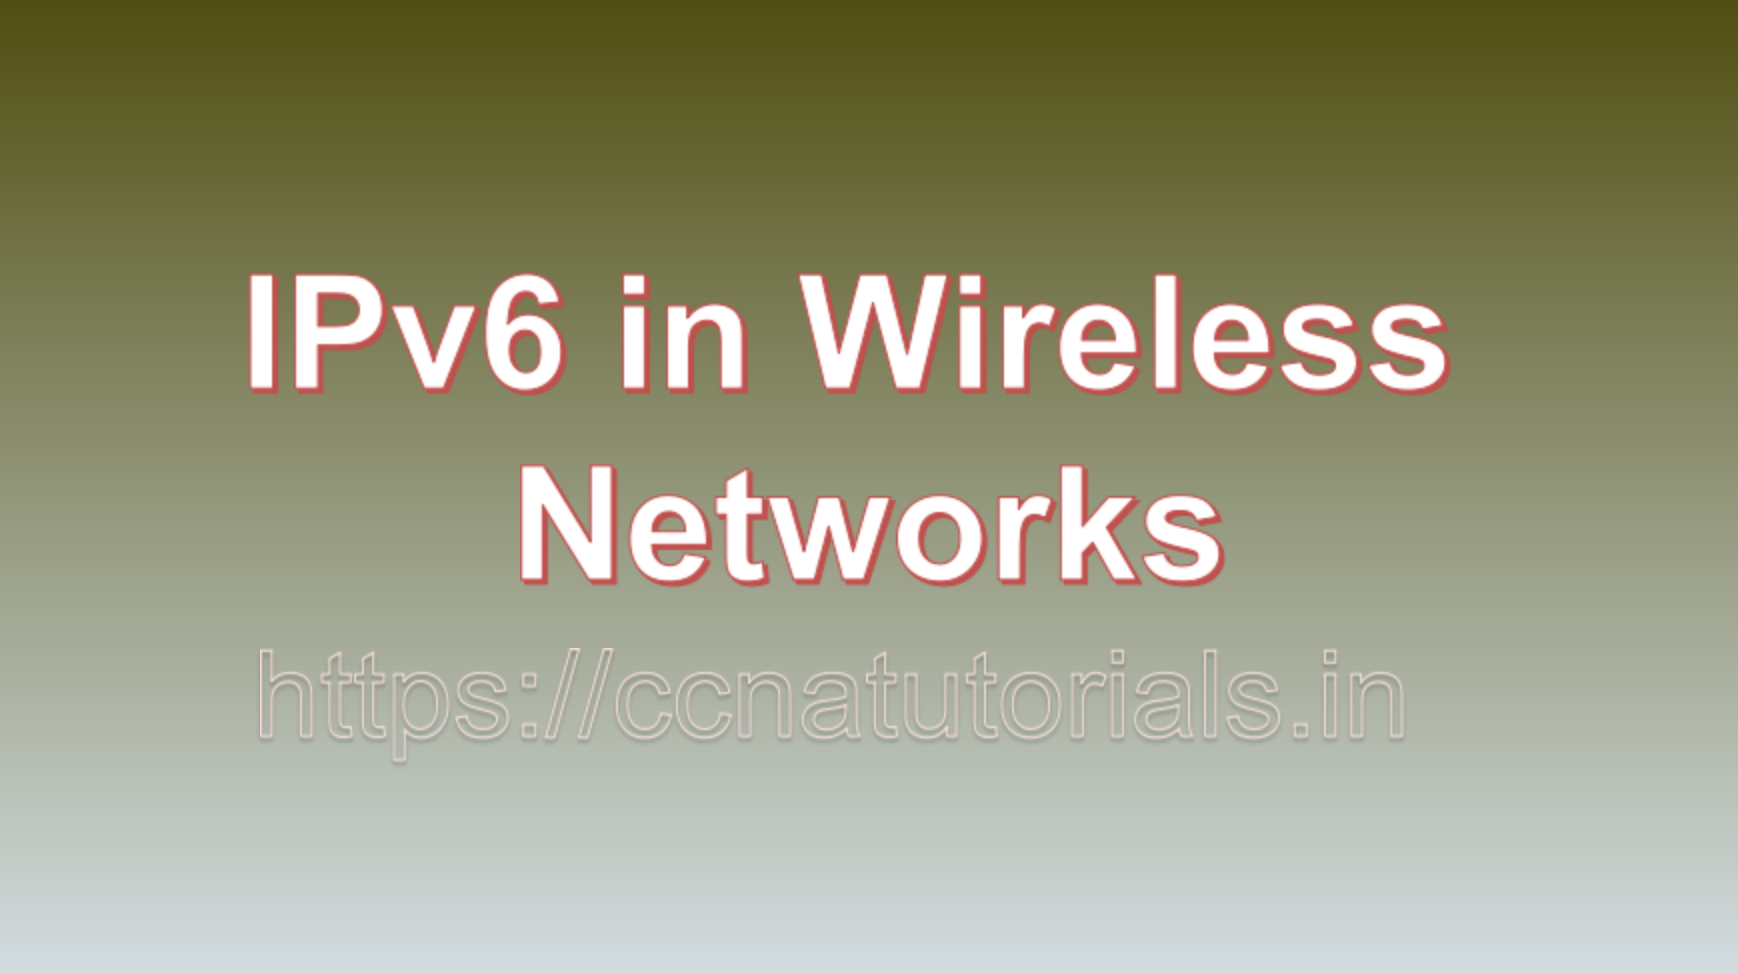 IPv6 in Wireless Networks, ccna, ccna tutorials